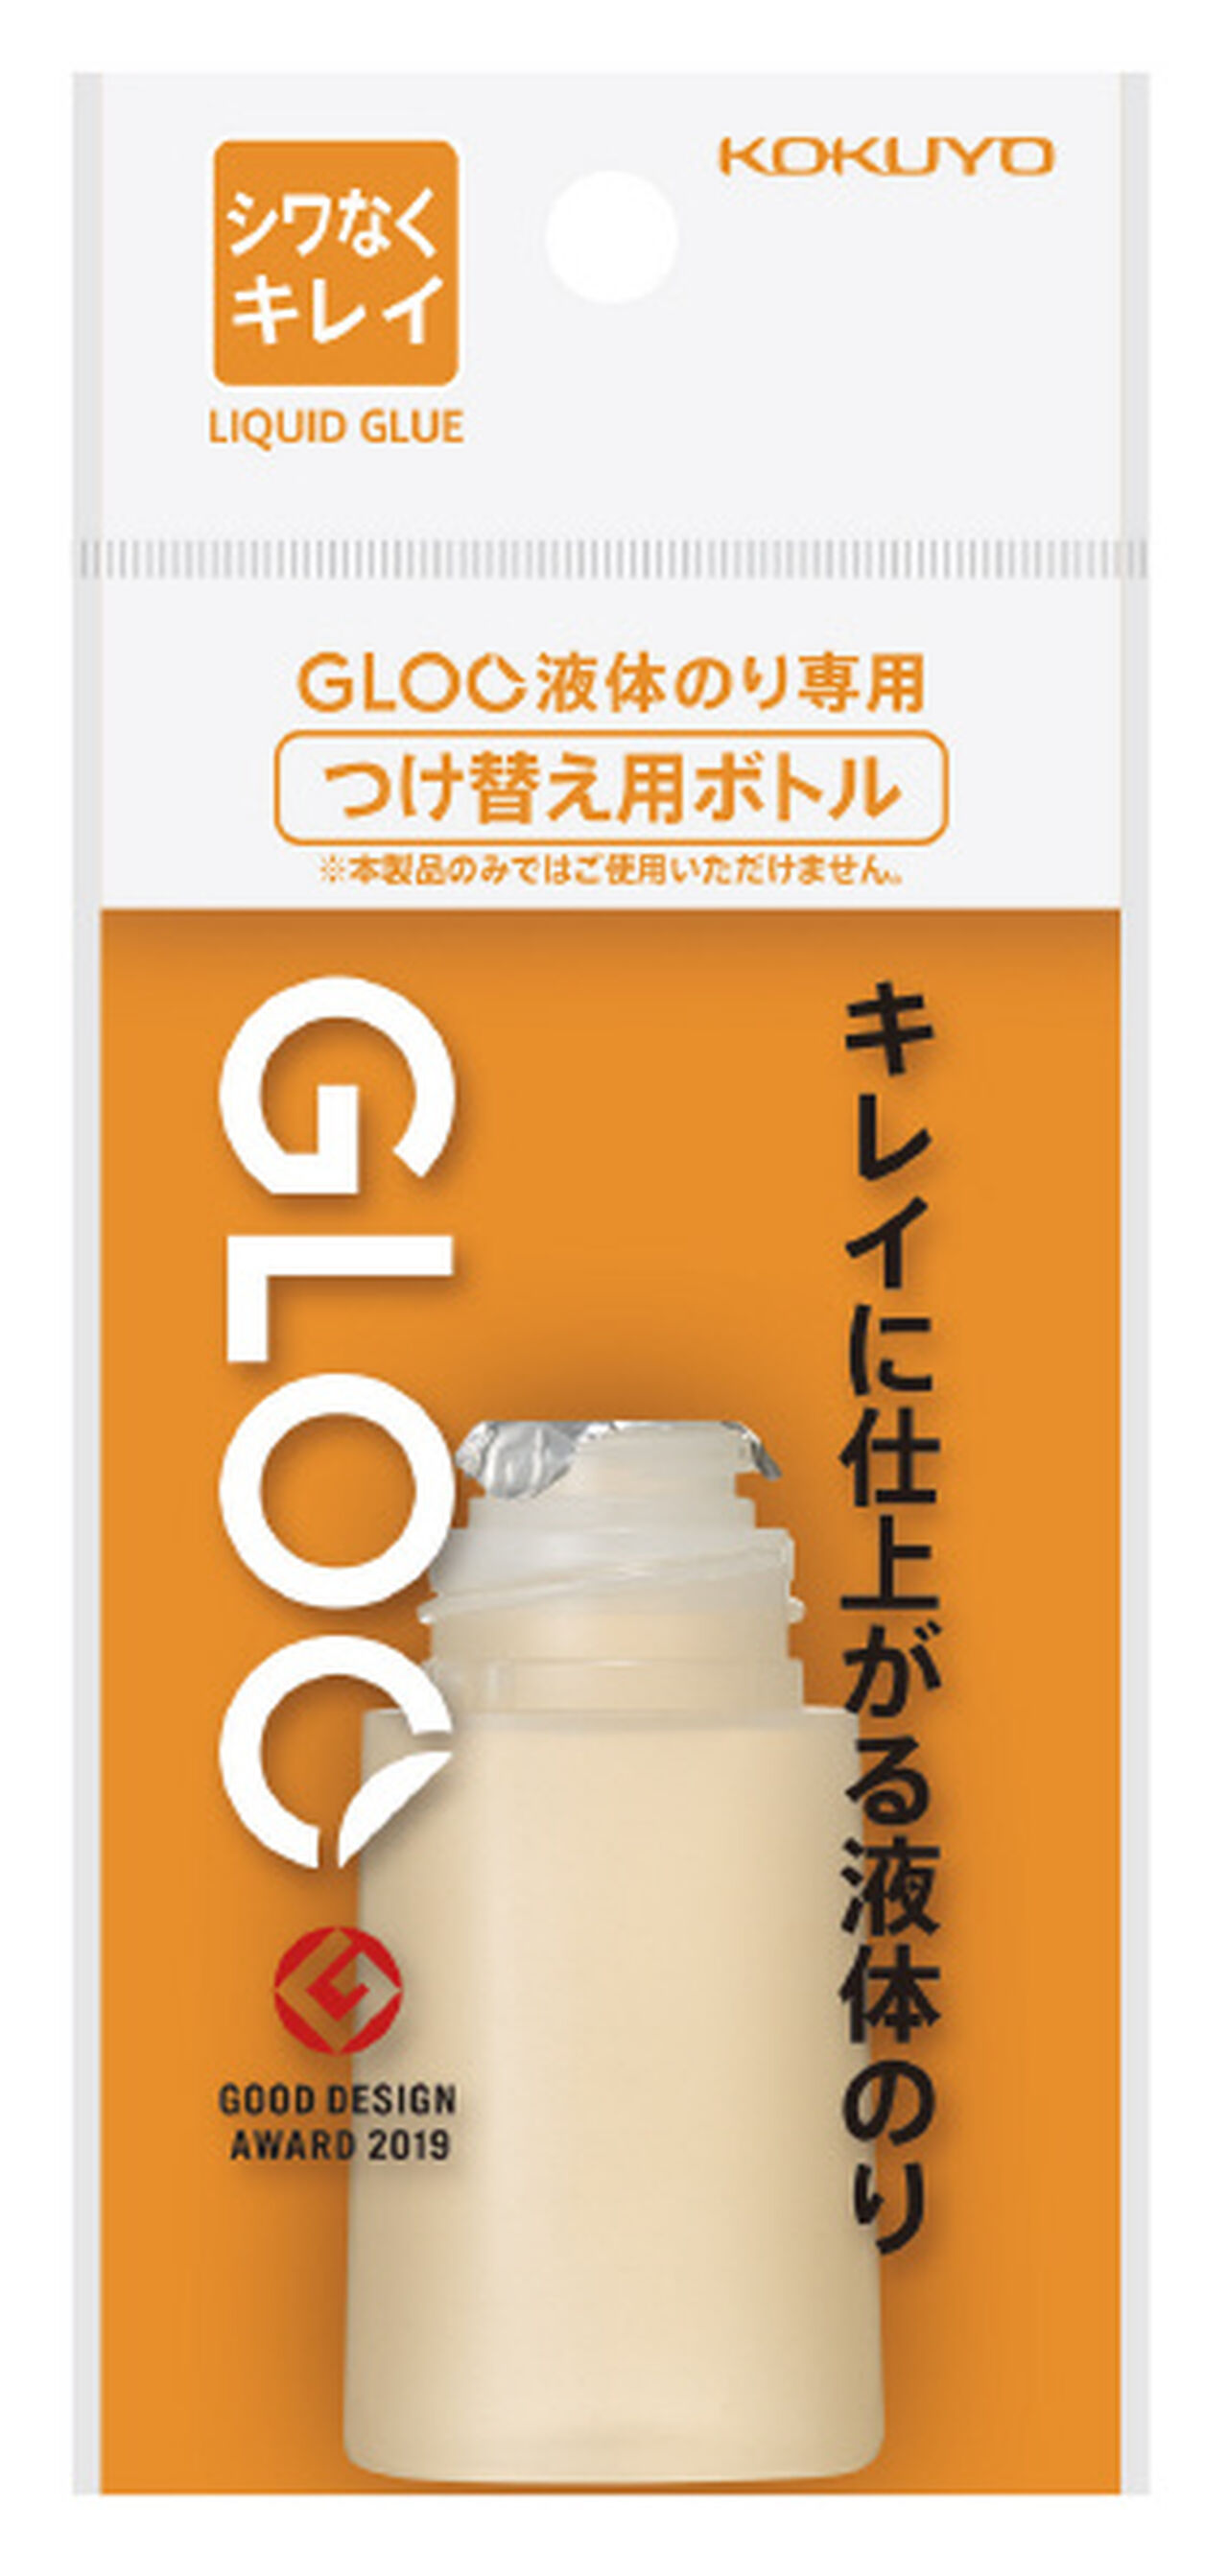 KOKUYO │Official Global Online Store │GLOO Liquid Glue